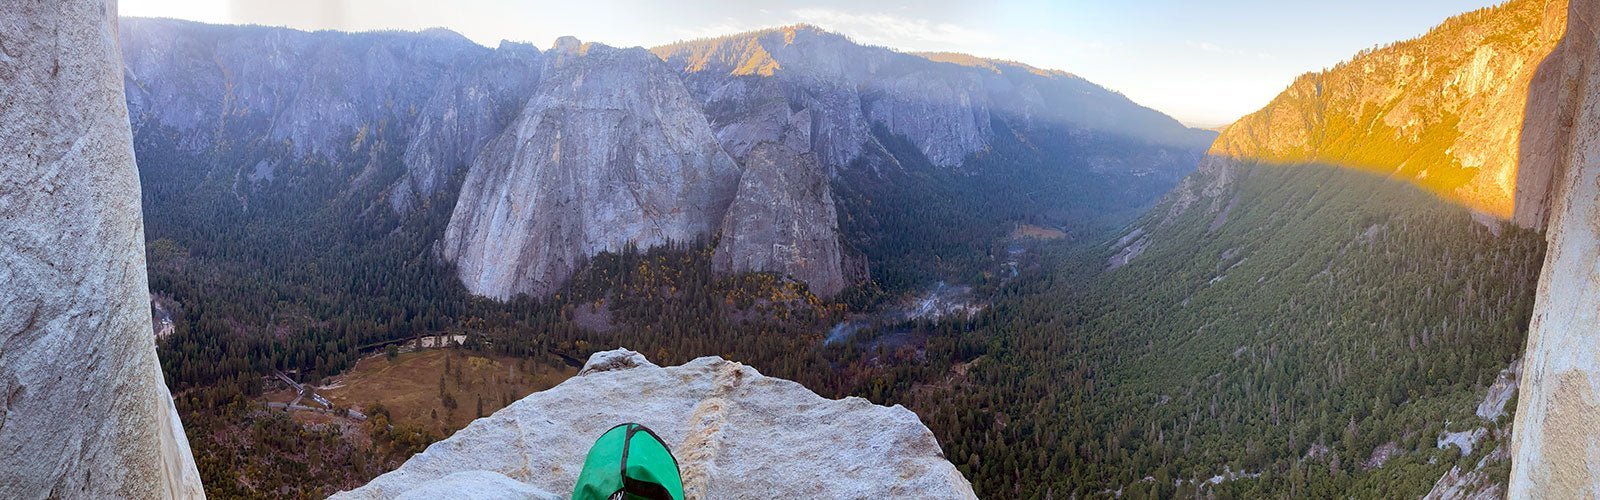 Trip Report: Climbing Freerider on the Southwest Face of El Capitan in Yosemite - Next Adventure